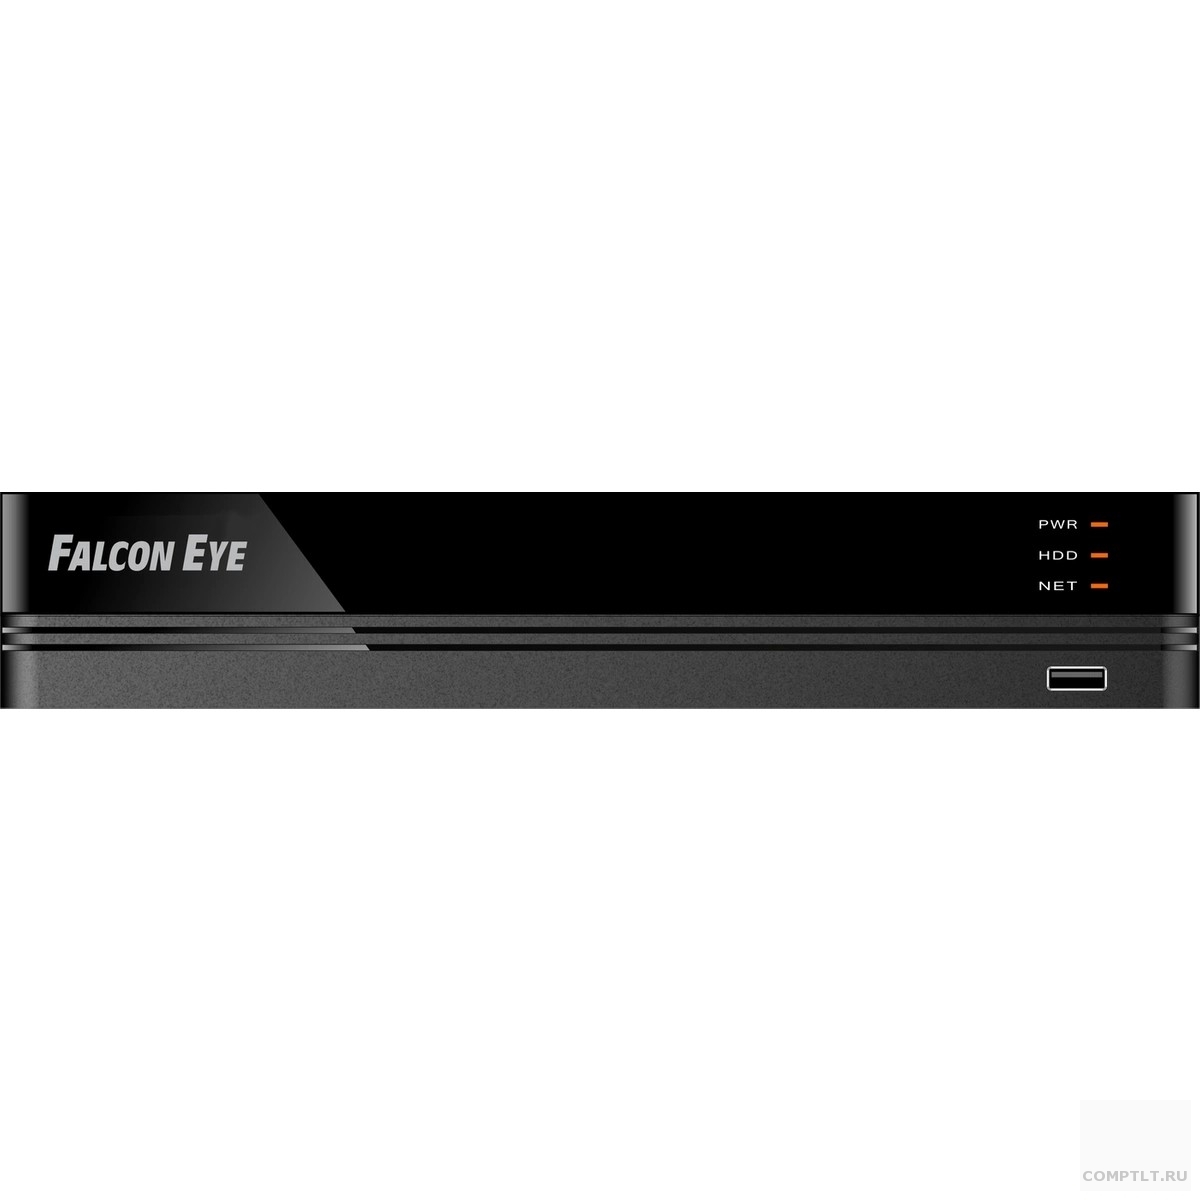 Falcon Eye FE-NVR5108 8 канальный 5Мп IP регистратор Запись 8 кан 5Мп 30к/с Поток вх/вых 40/20 Mbps Н.264/H.265/H265 Протокол ONVIF, RTSP, P2P HDMI, VGA, 2 USB, 1 LAN, SATA1 до 10TB HDD